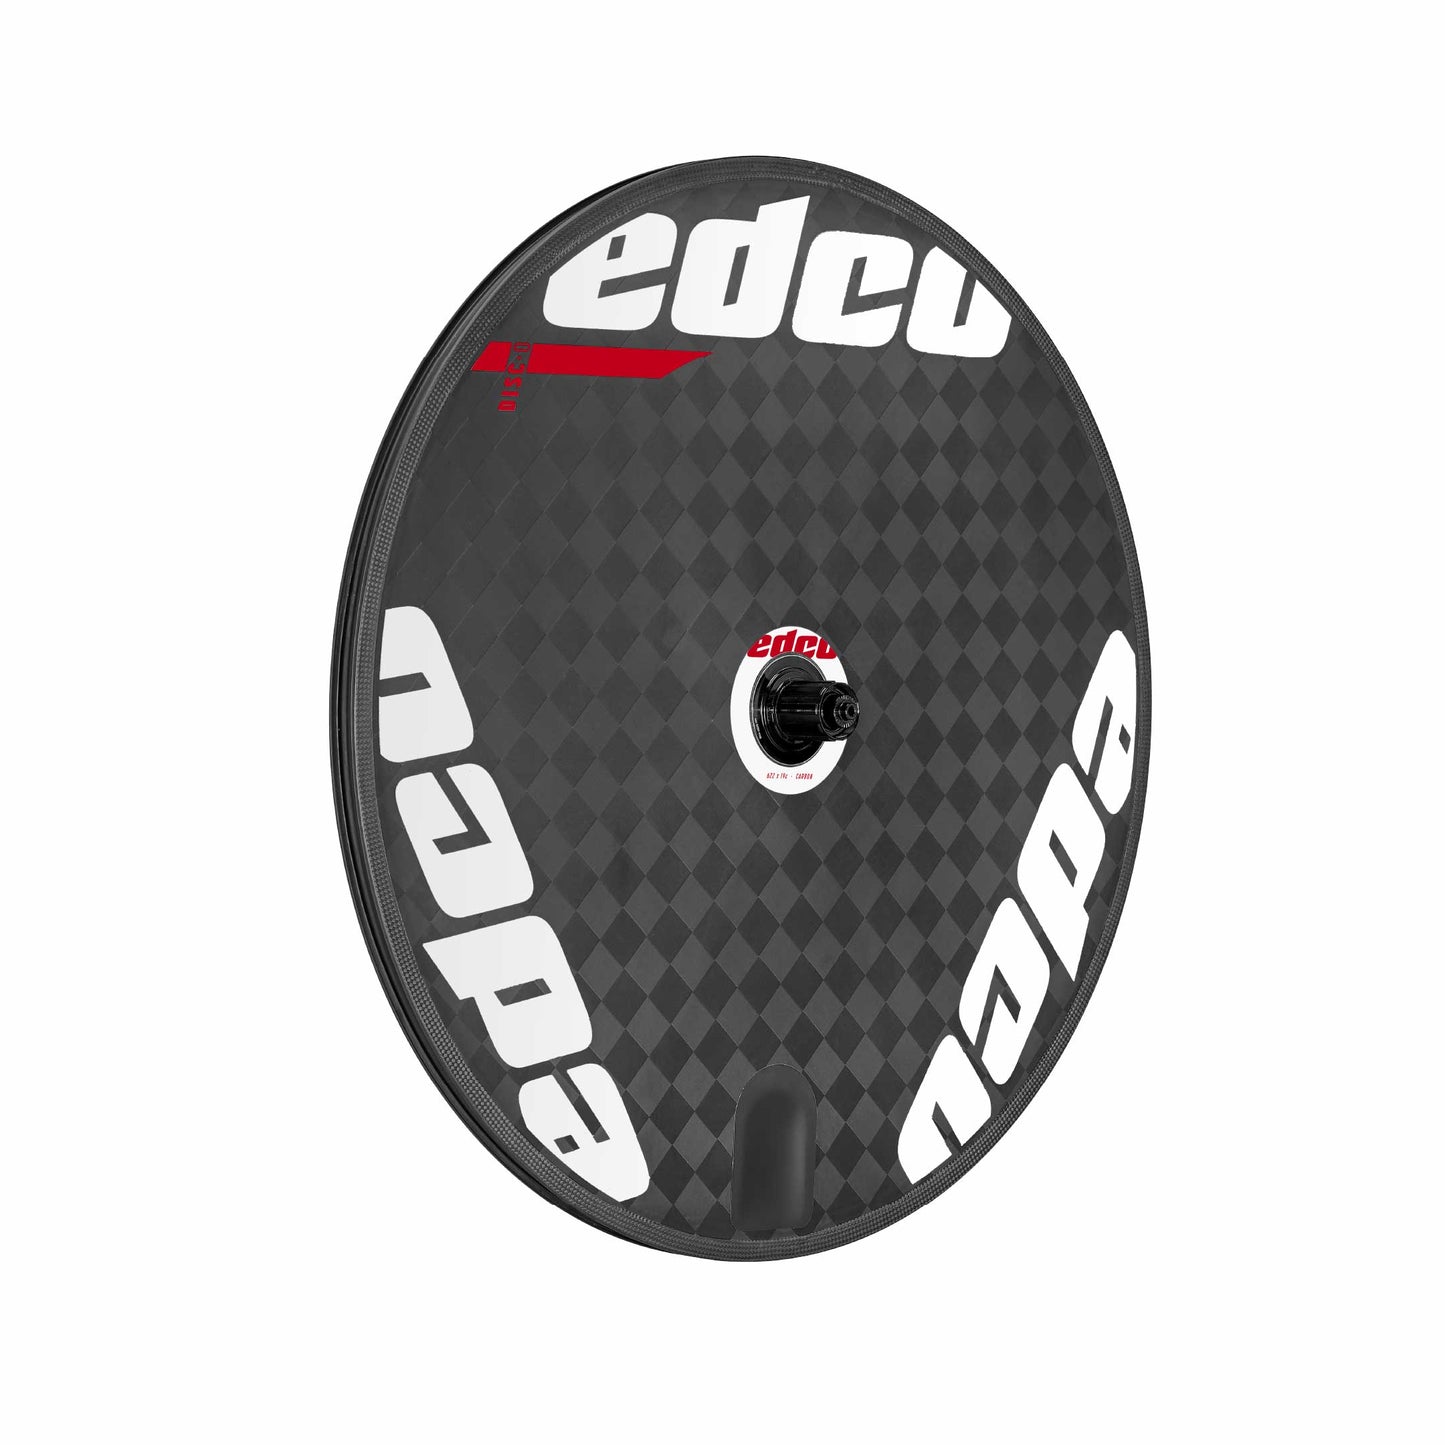 Full disc rear wheel, rim brake, triathlon or timetrail wheel